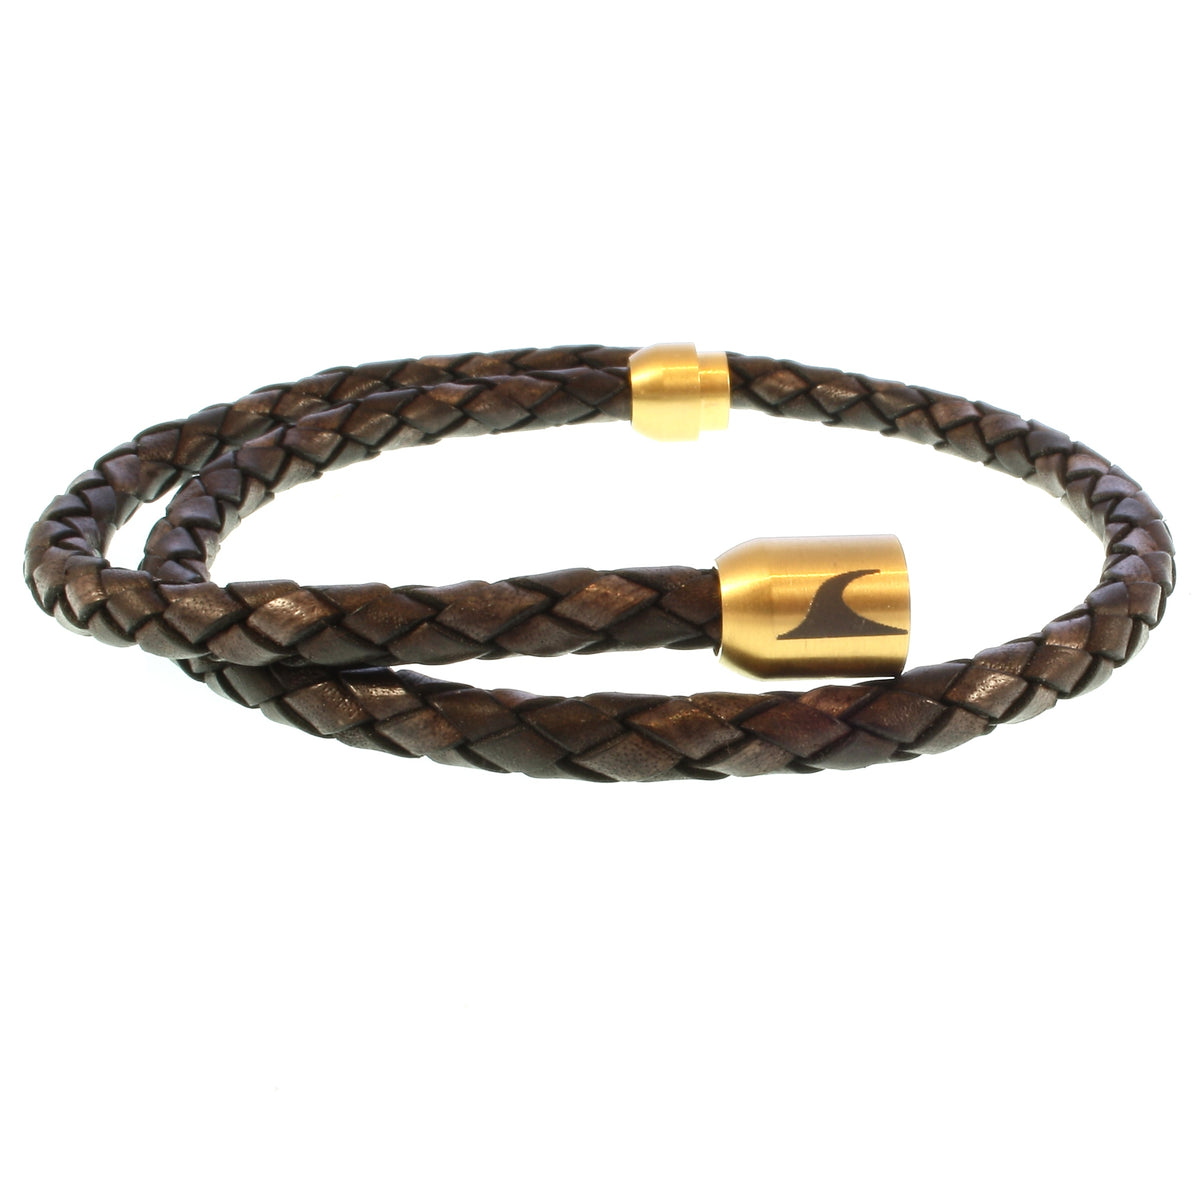 Herren-Leder-Armband-hawaii-braun-gold-geflochten-Edelstahlverschluss-offen-wavepirate-shop-f